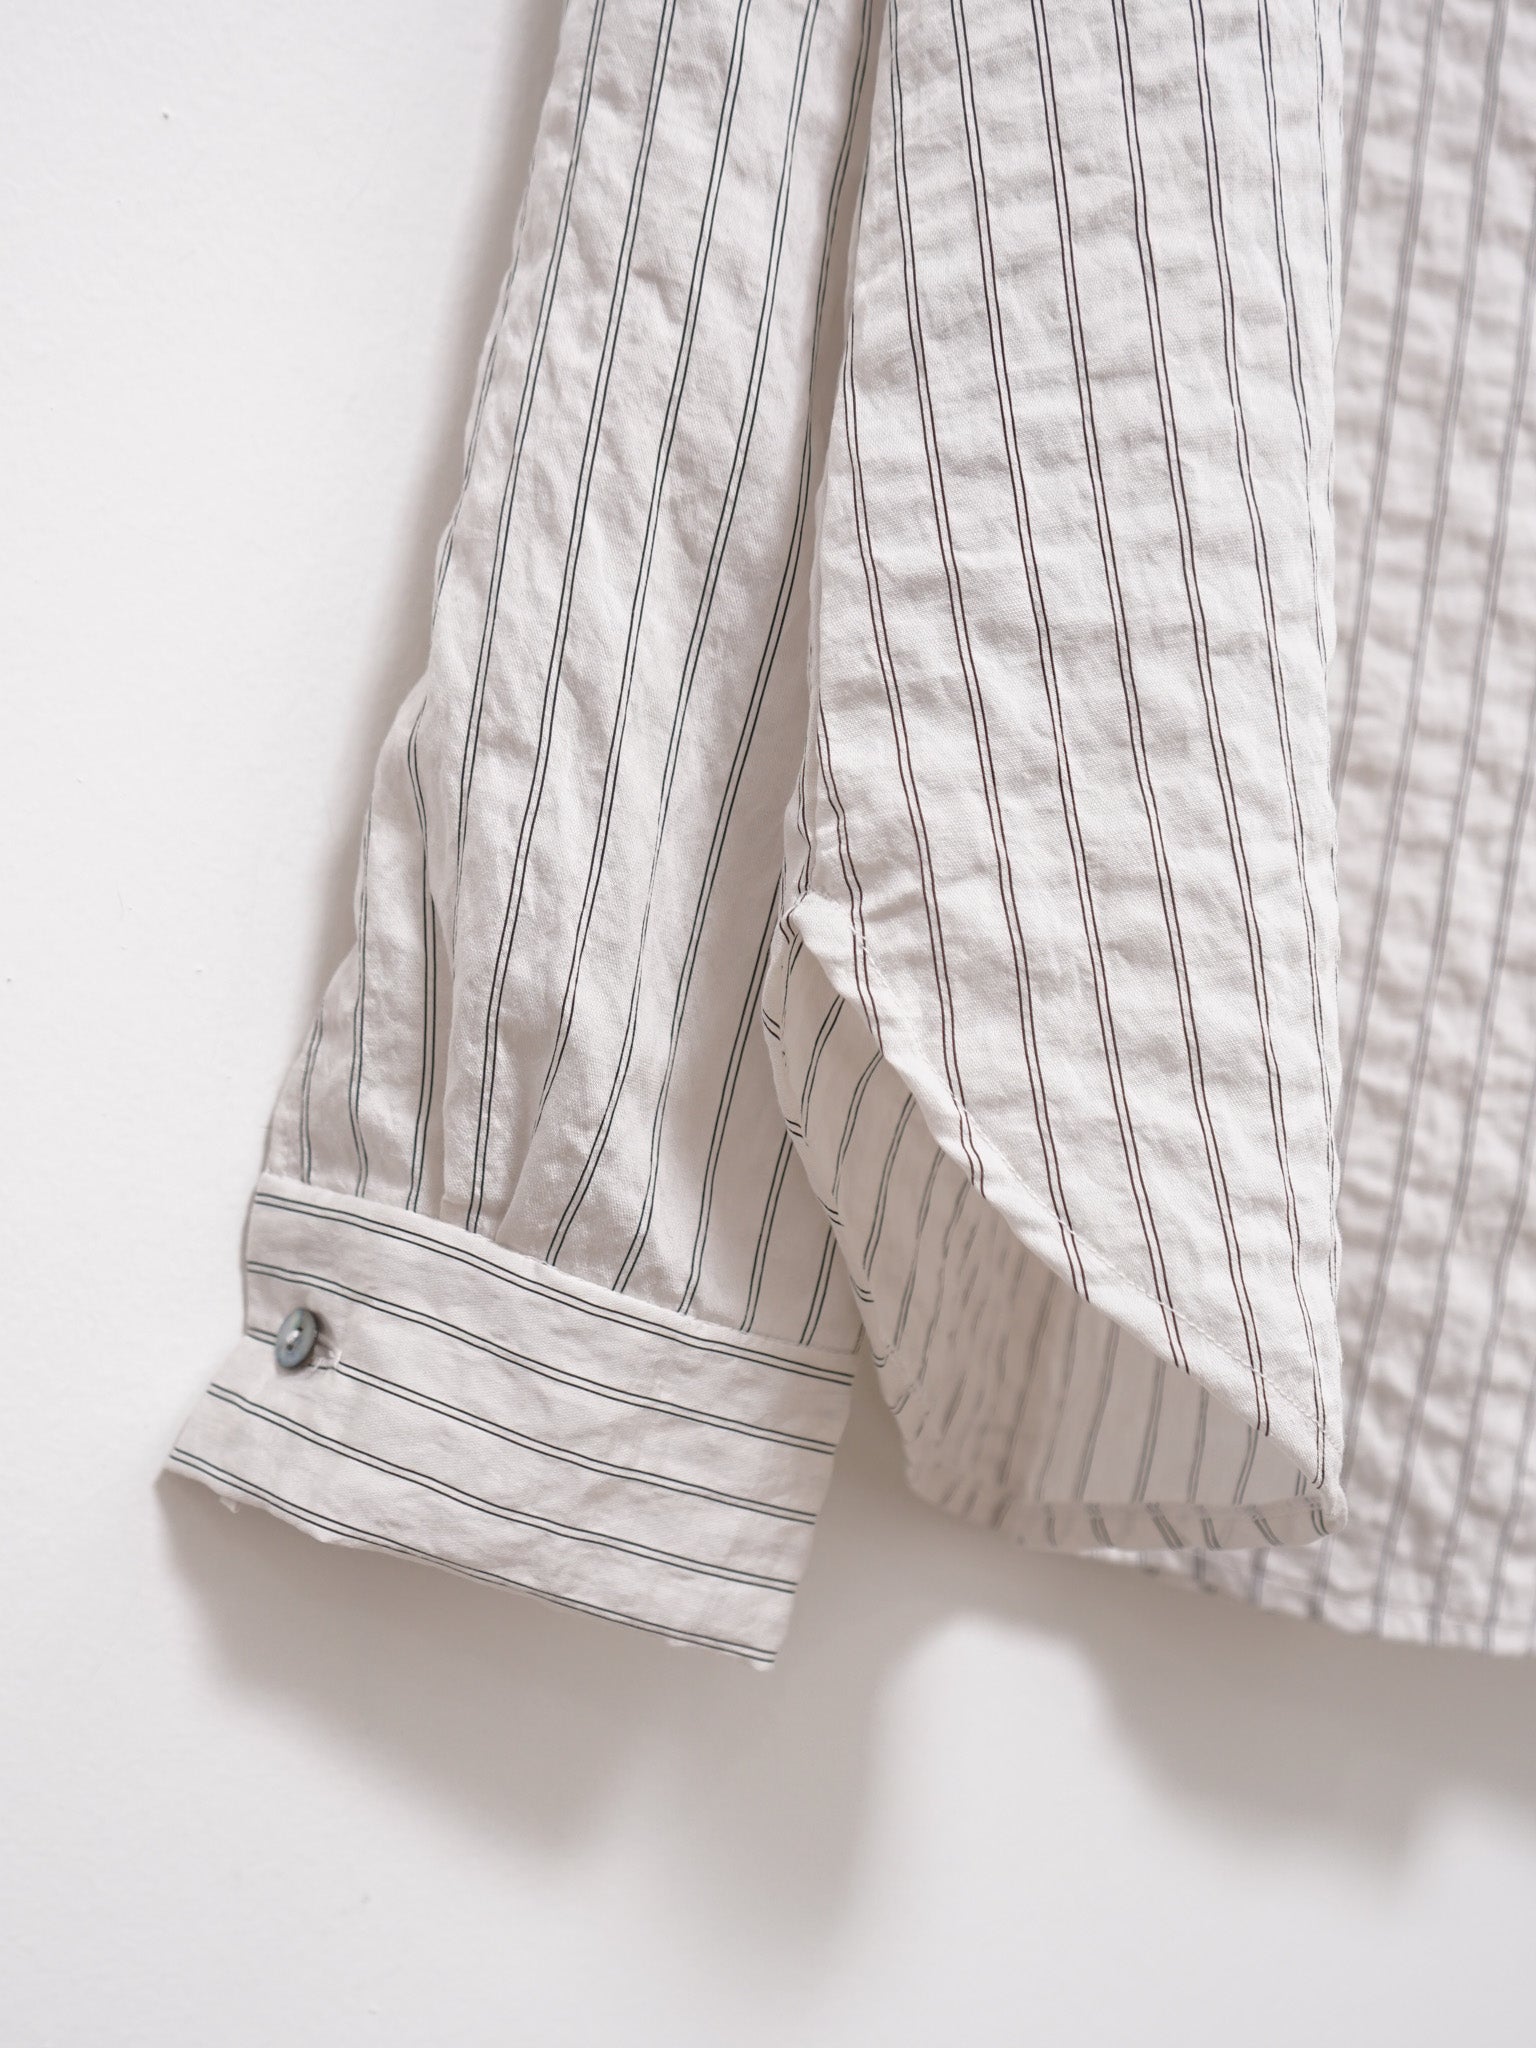 Namu Shop - Album di Famiglia Striped Short Collar Shirt - Off White